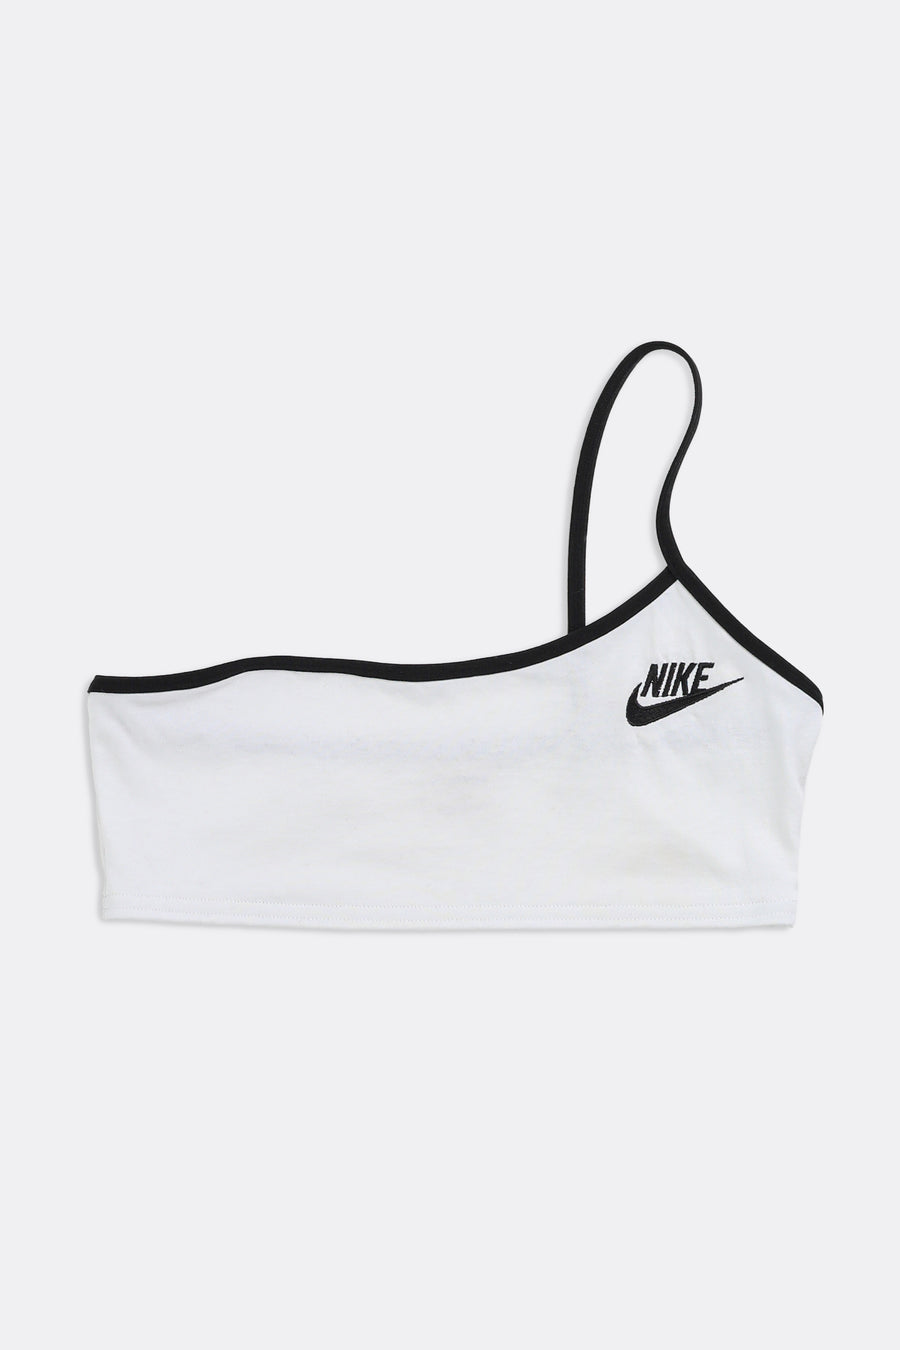 Rework Nike One Shoulder Bra Top - M